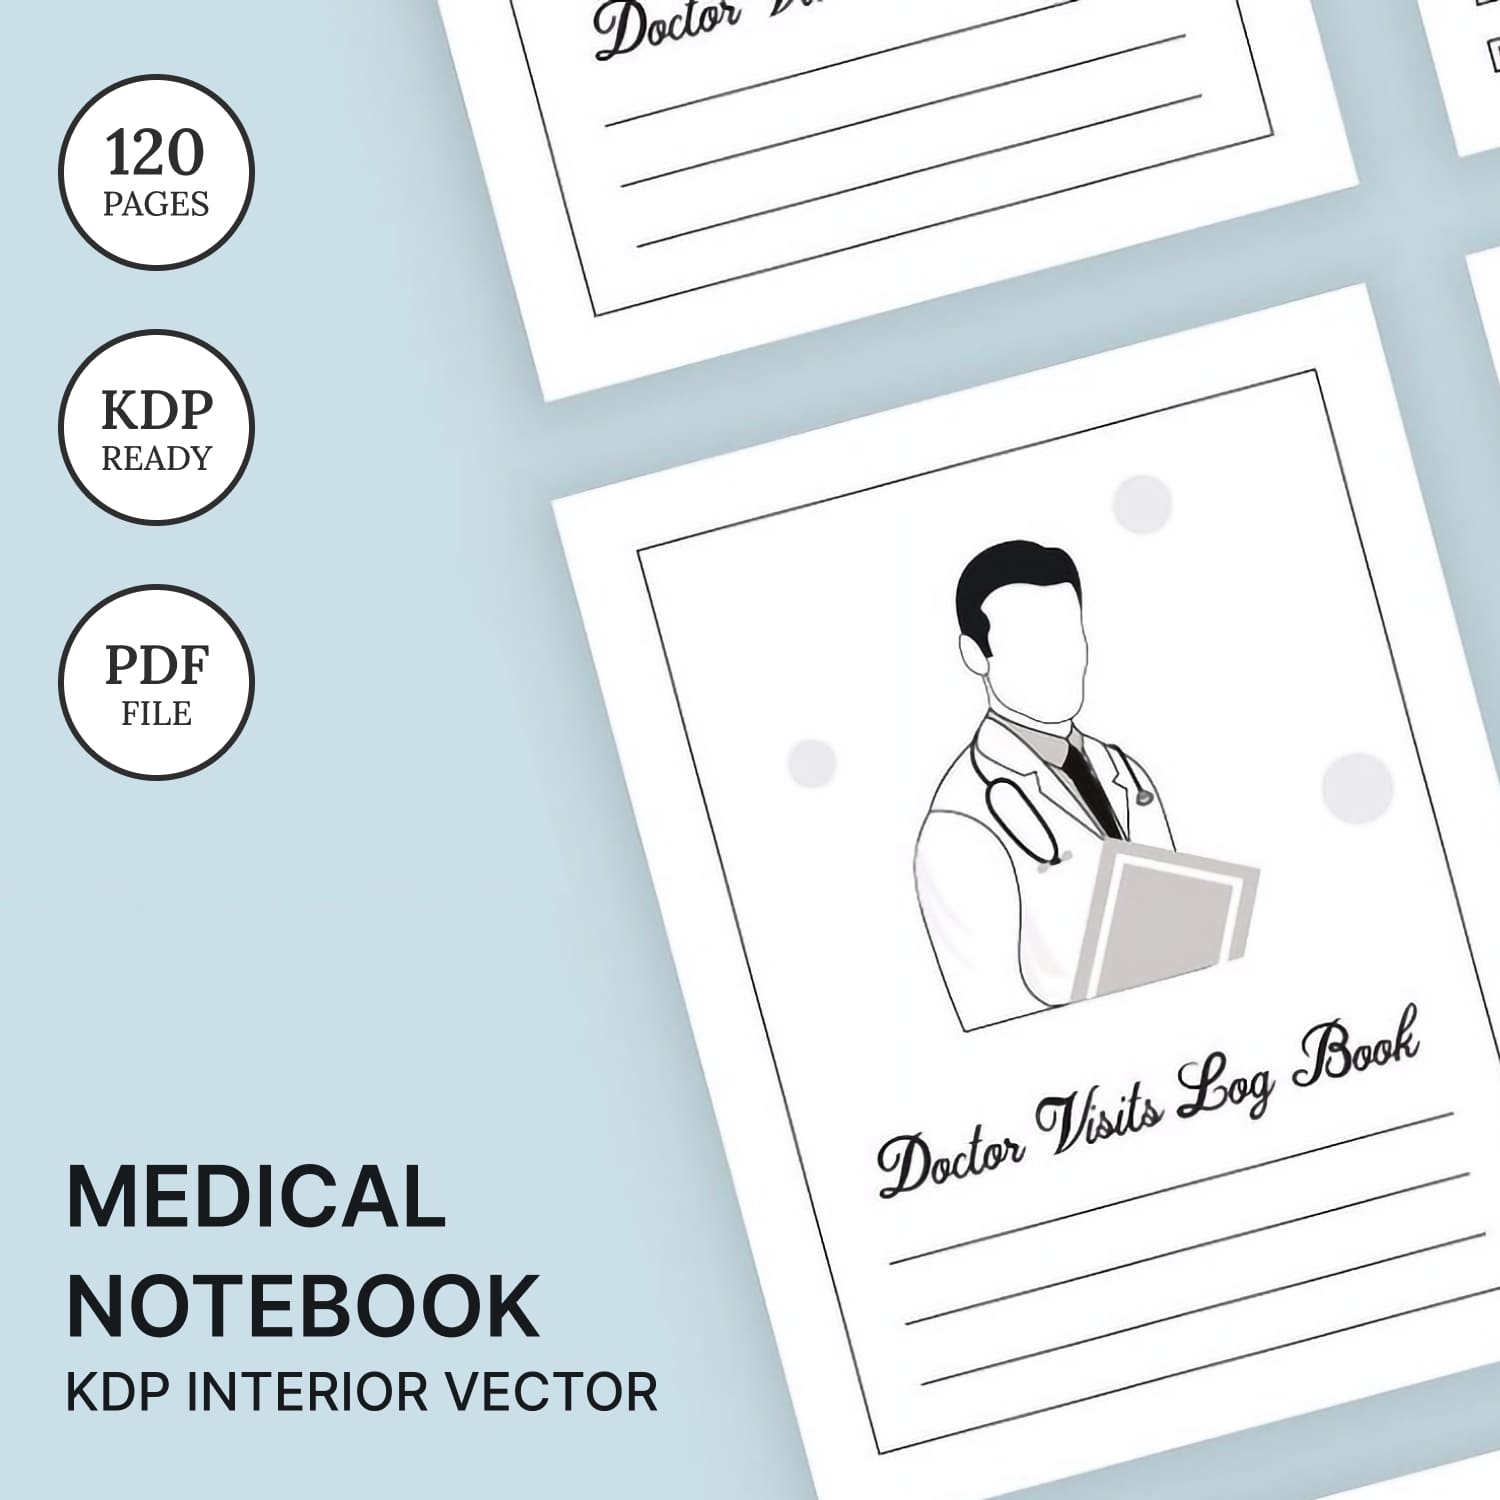 Medical notebook KDP interior vector - main image preview.